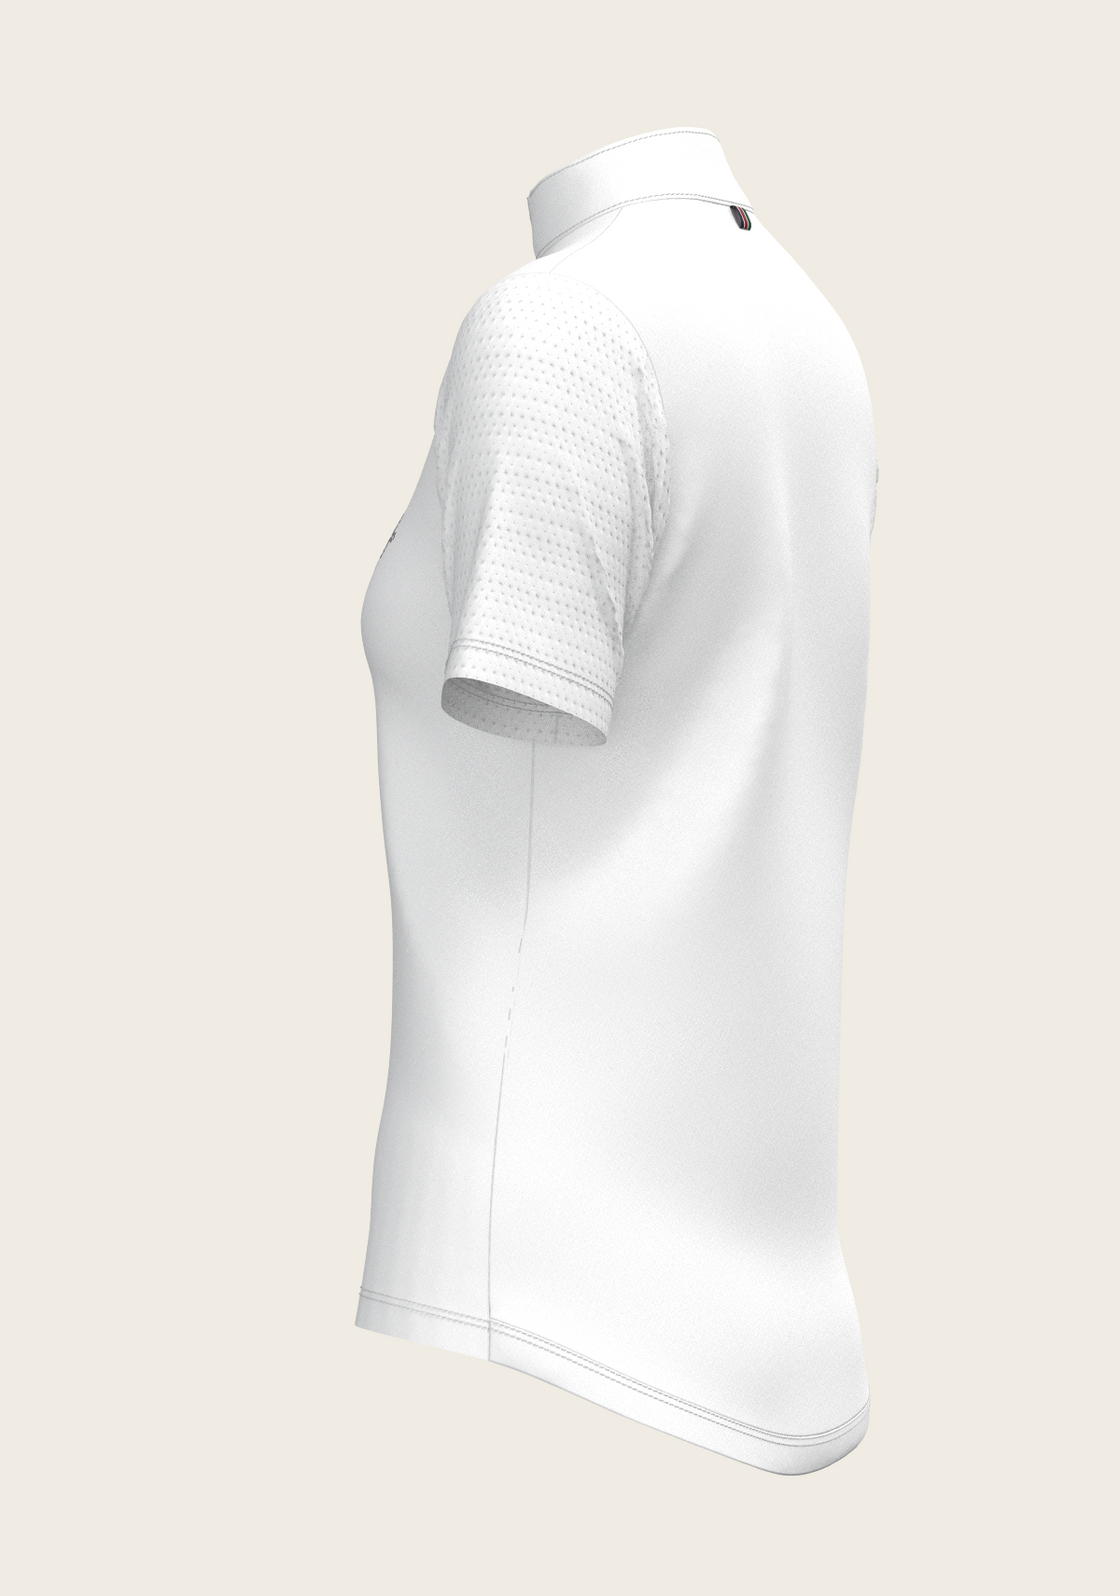  White with Navy Stripes Inner Details Short Sleeve Show Shirt